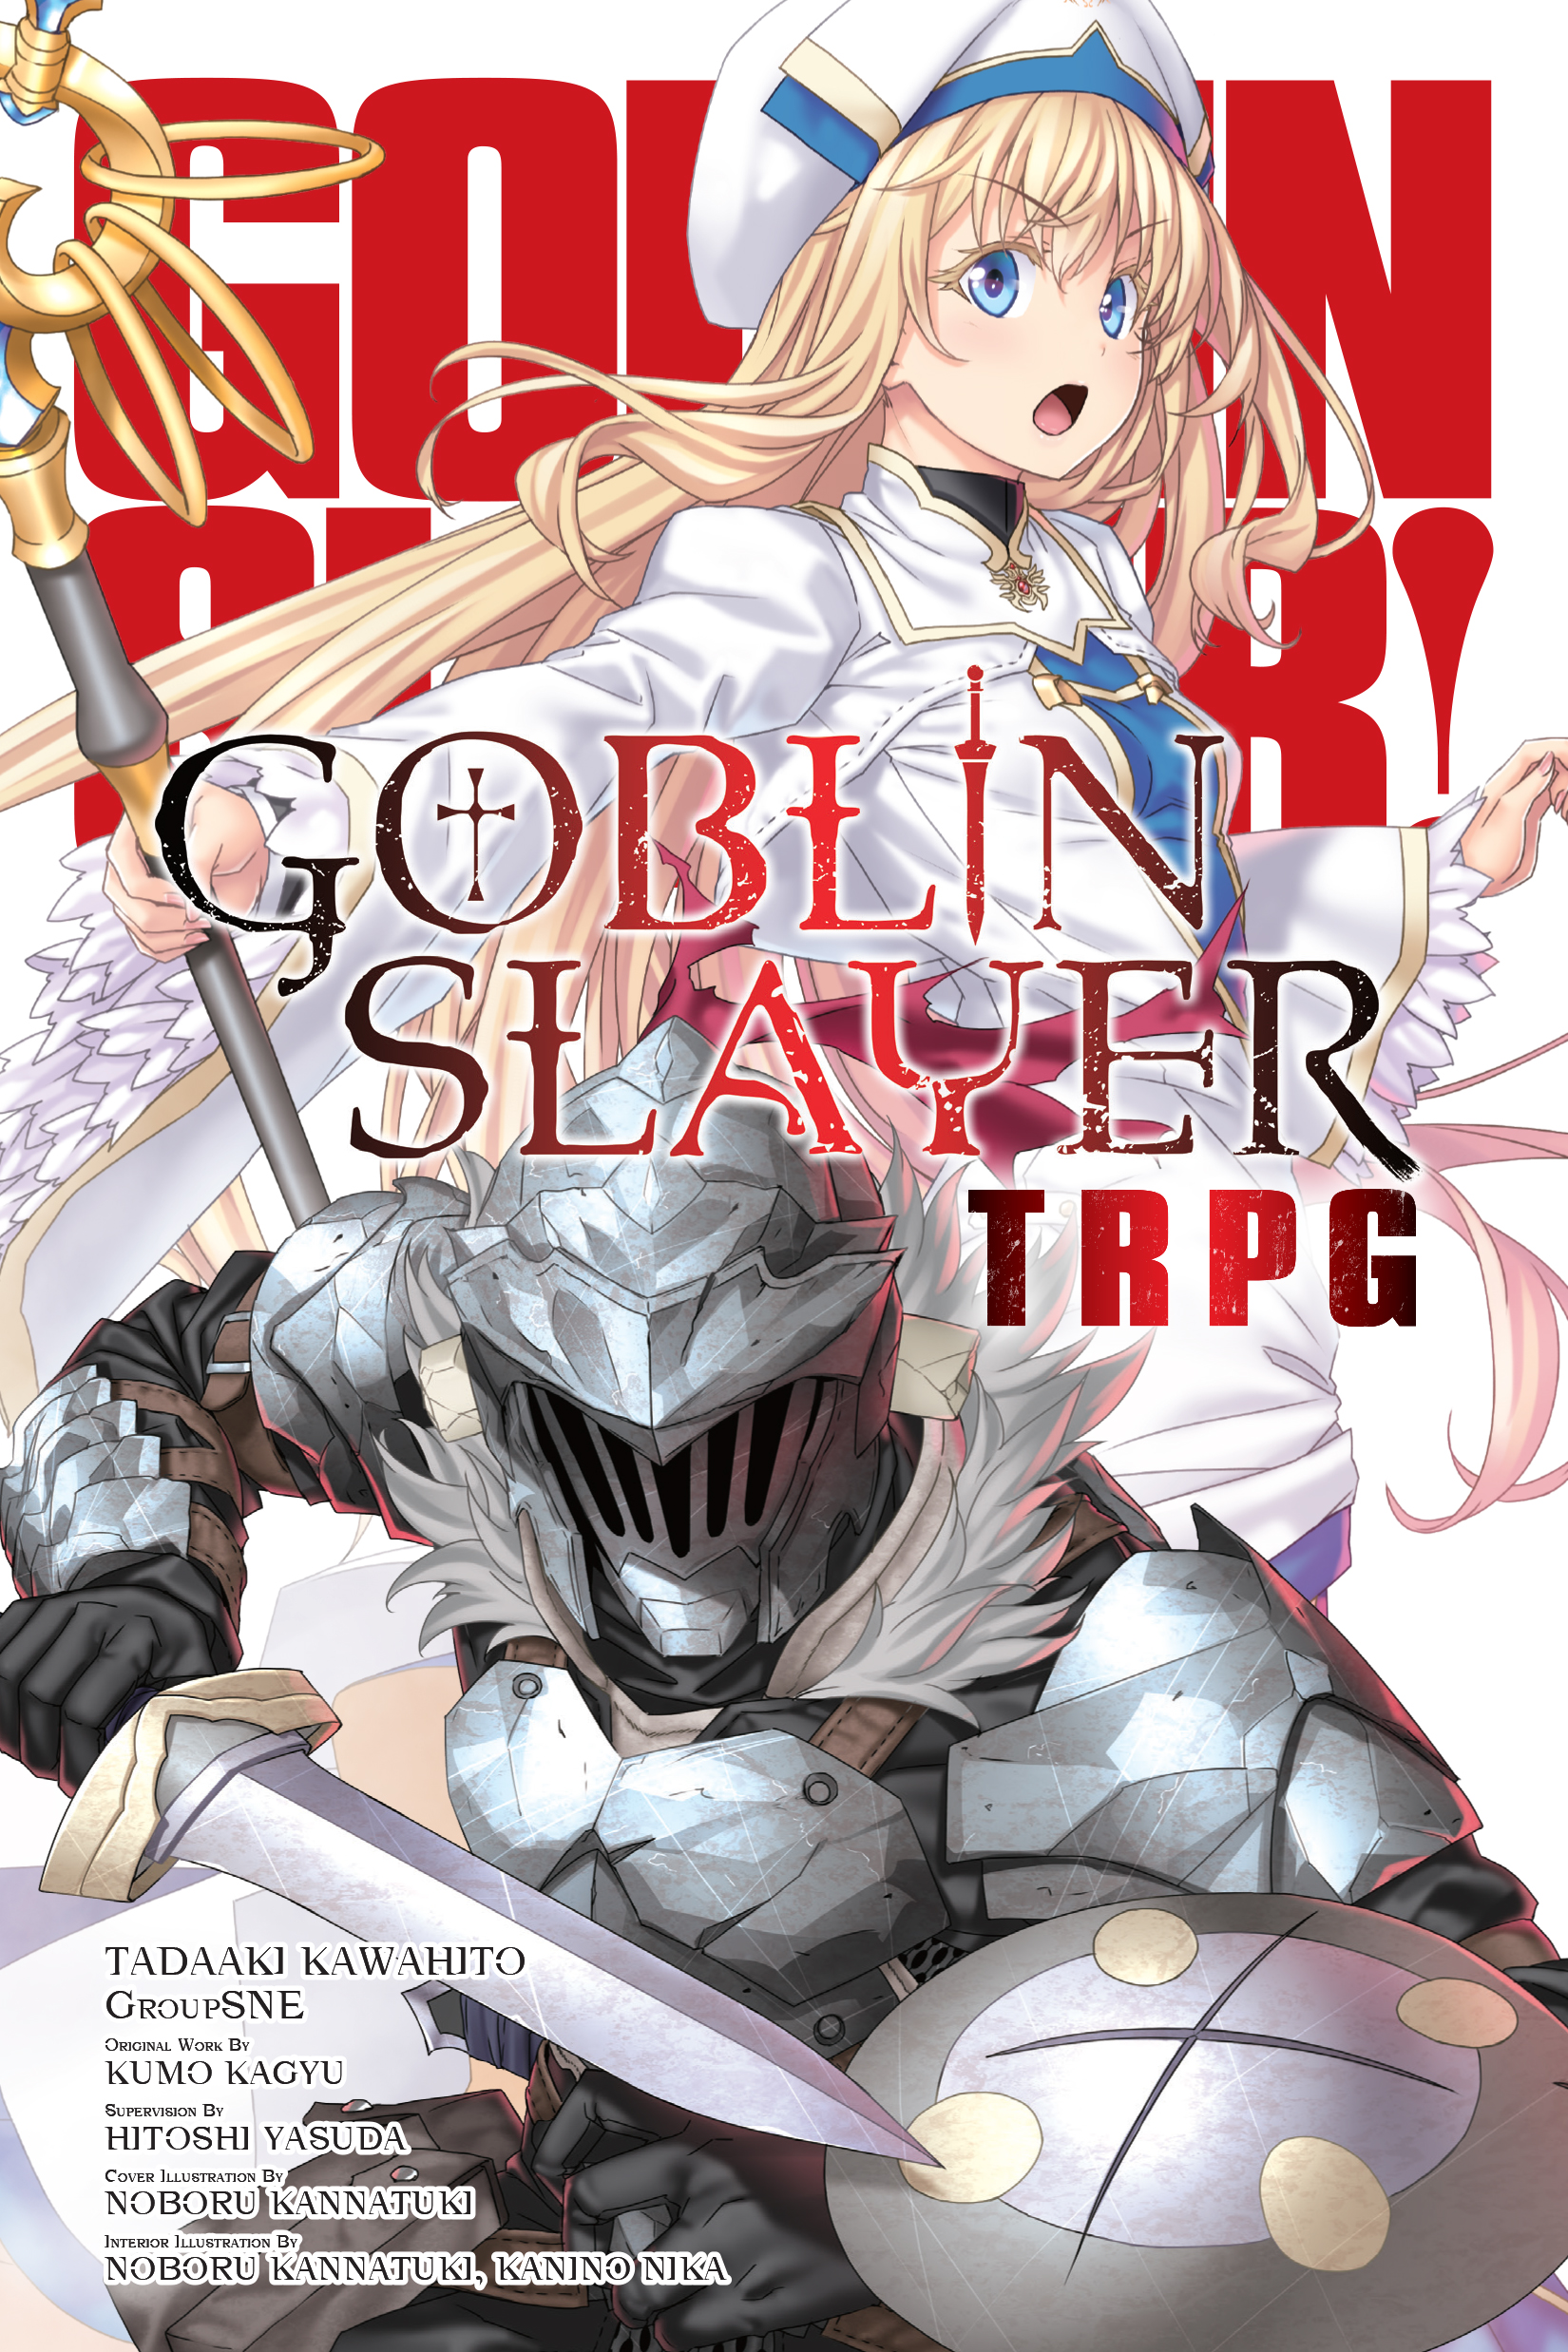 Reaper's Reviews: Goblin Slayer - HubPages